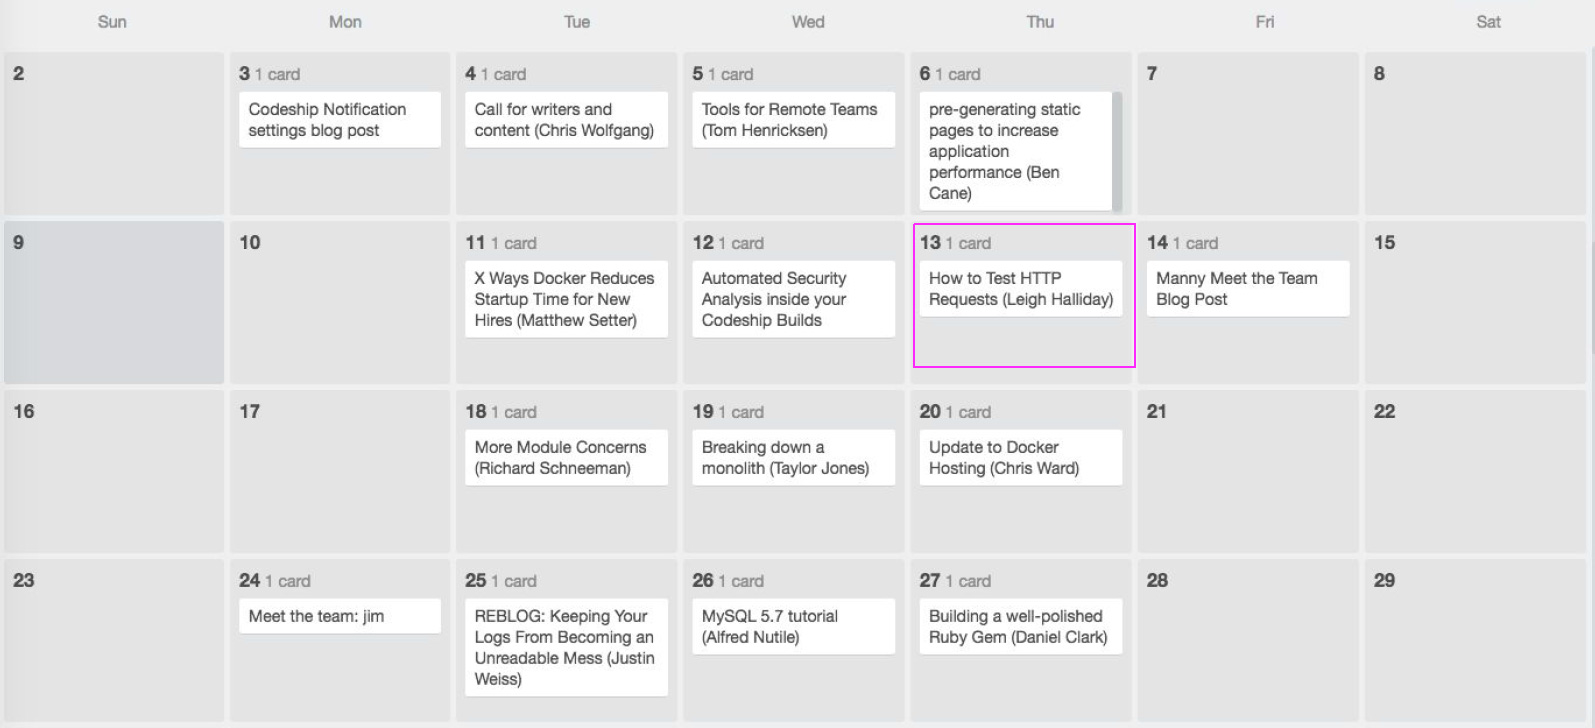 Calendar view of a content calendar